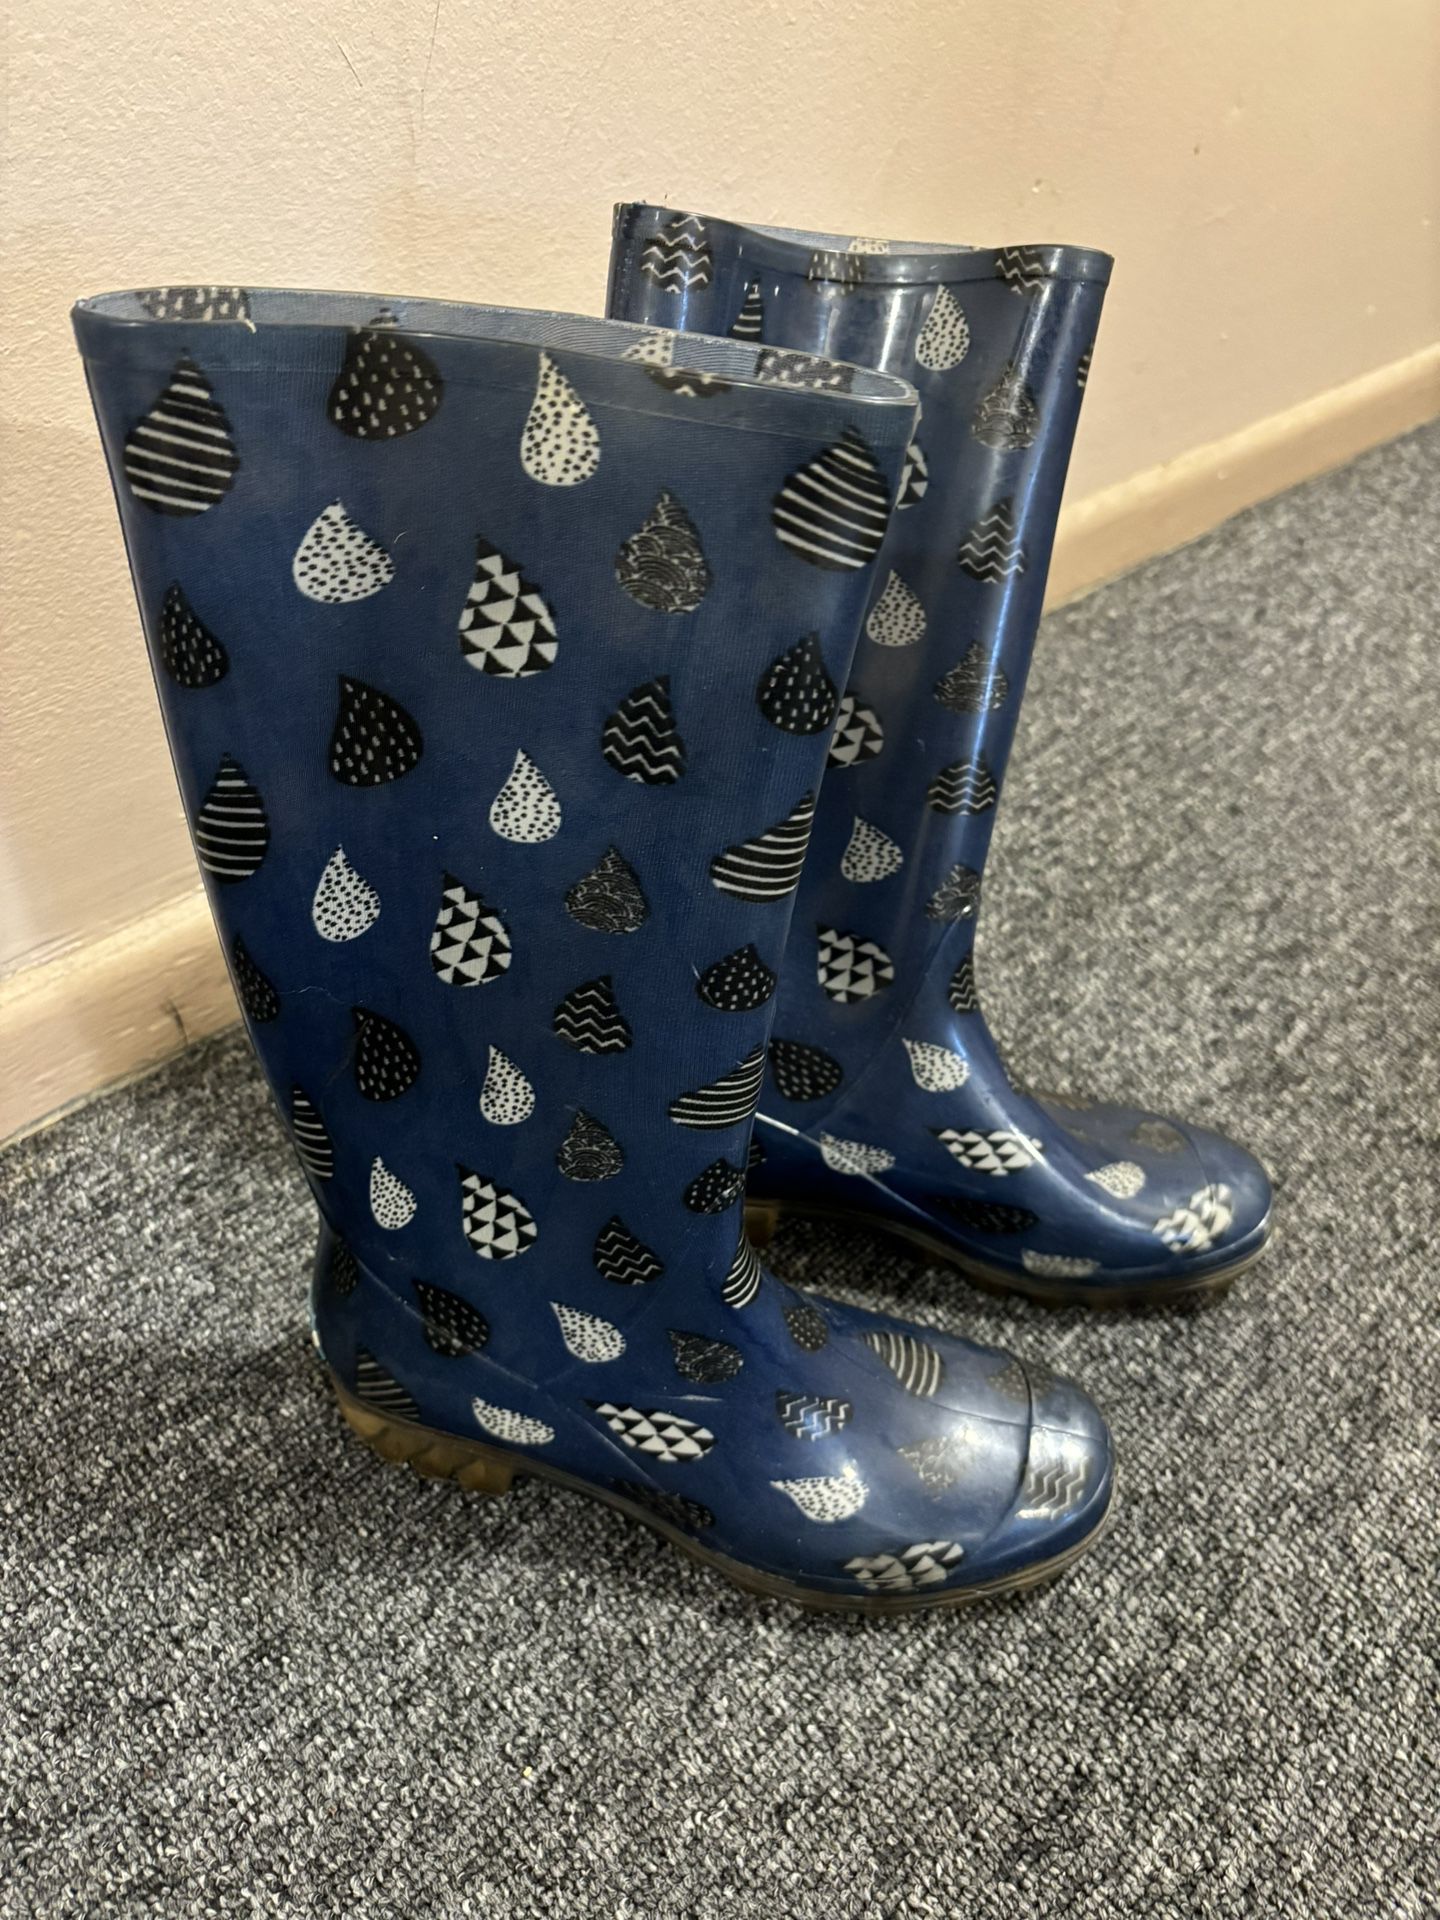 Blue raindrop pattern Toms rain boots- Size 7